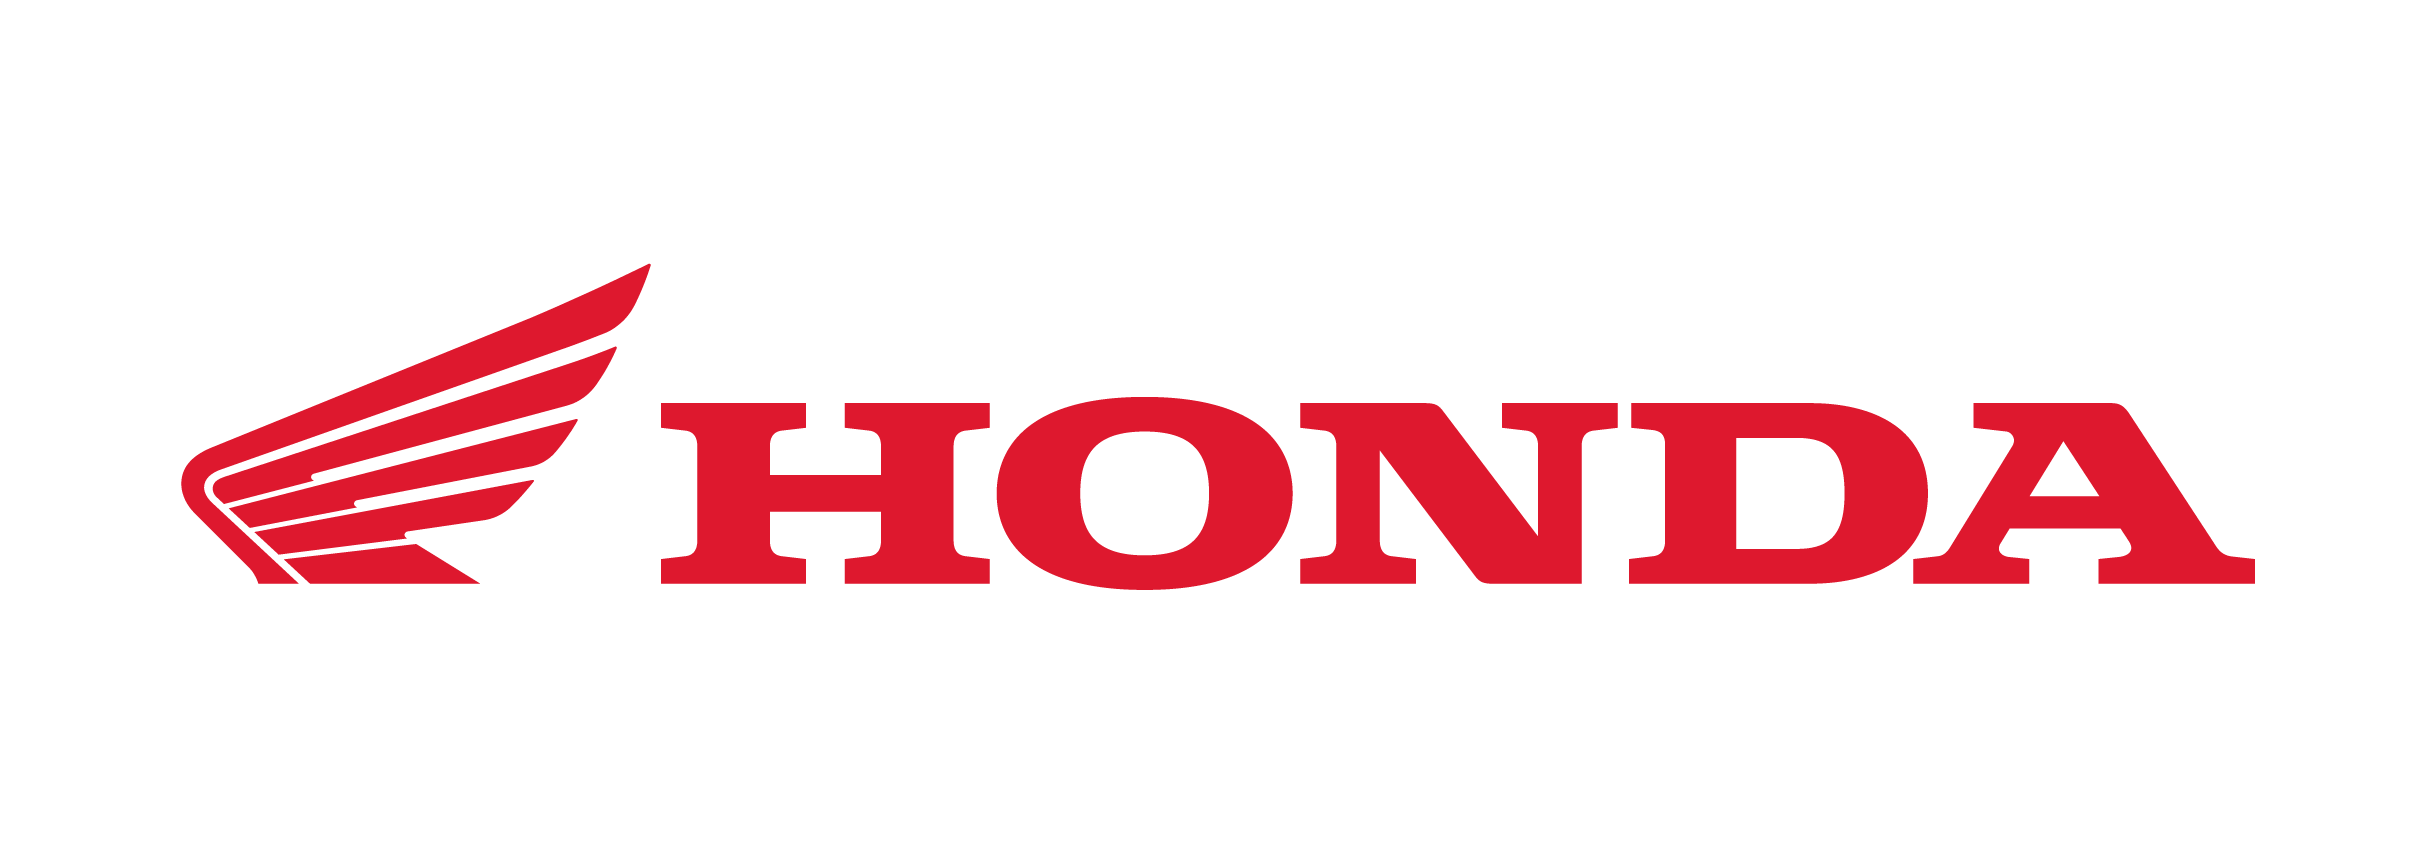 honda logo cartoon pinterest honda logos and motorcycle companies small